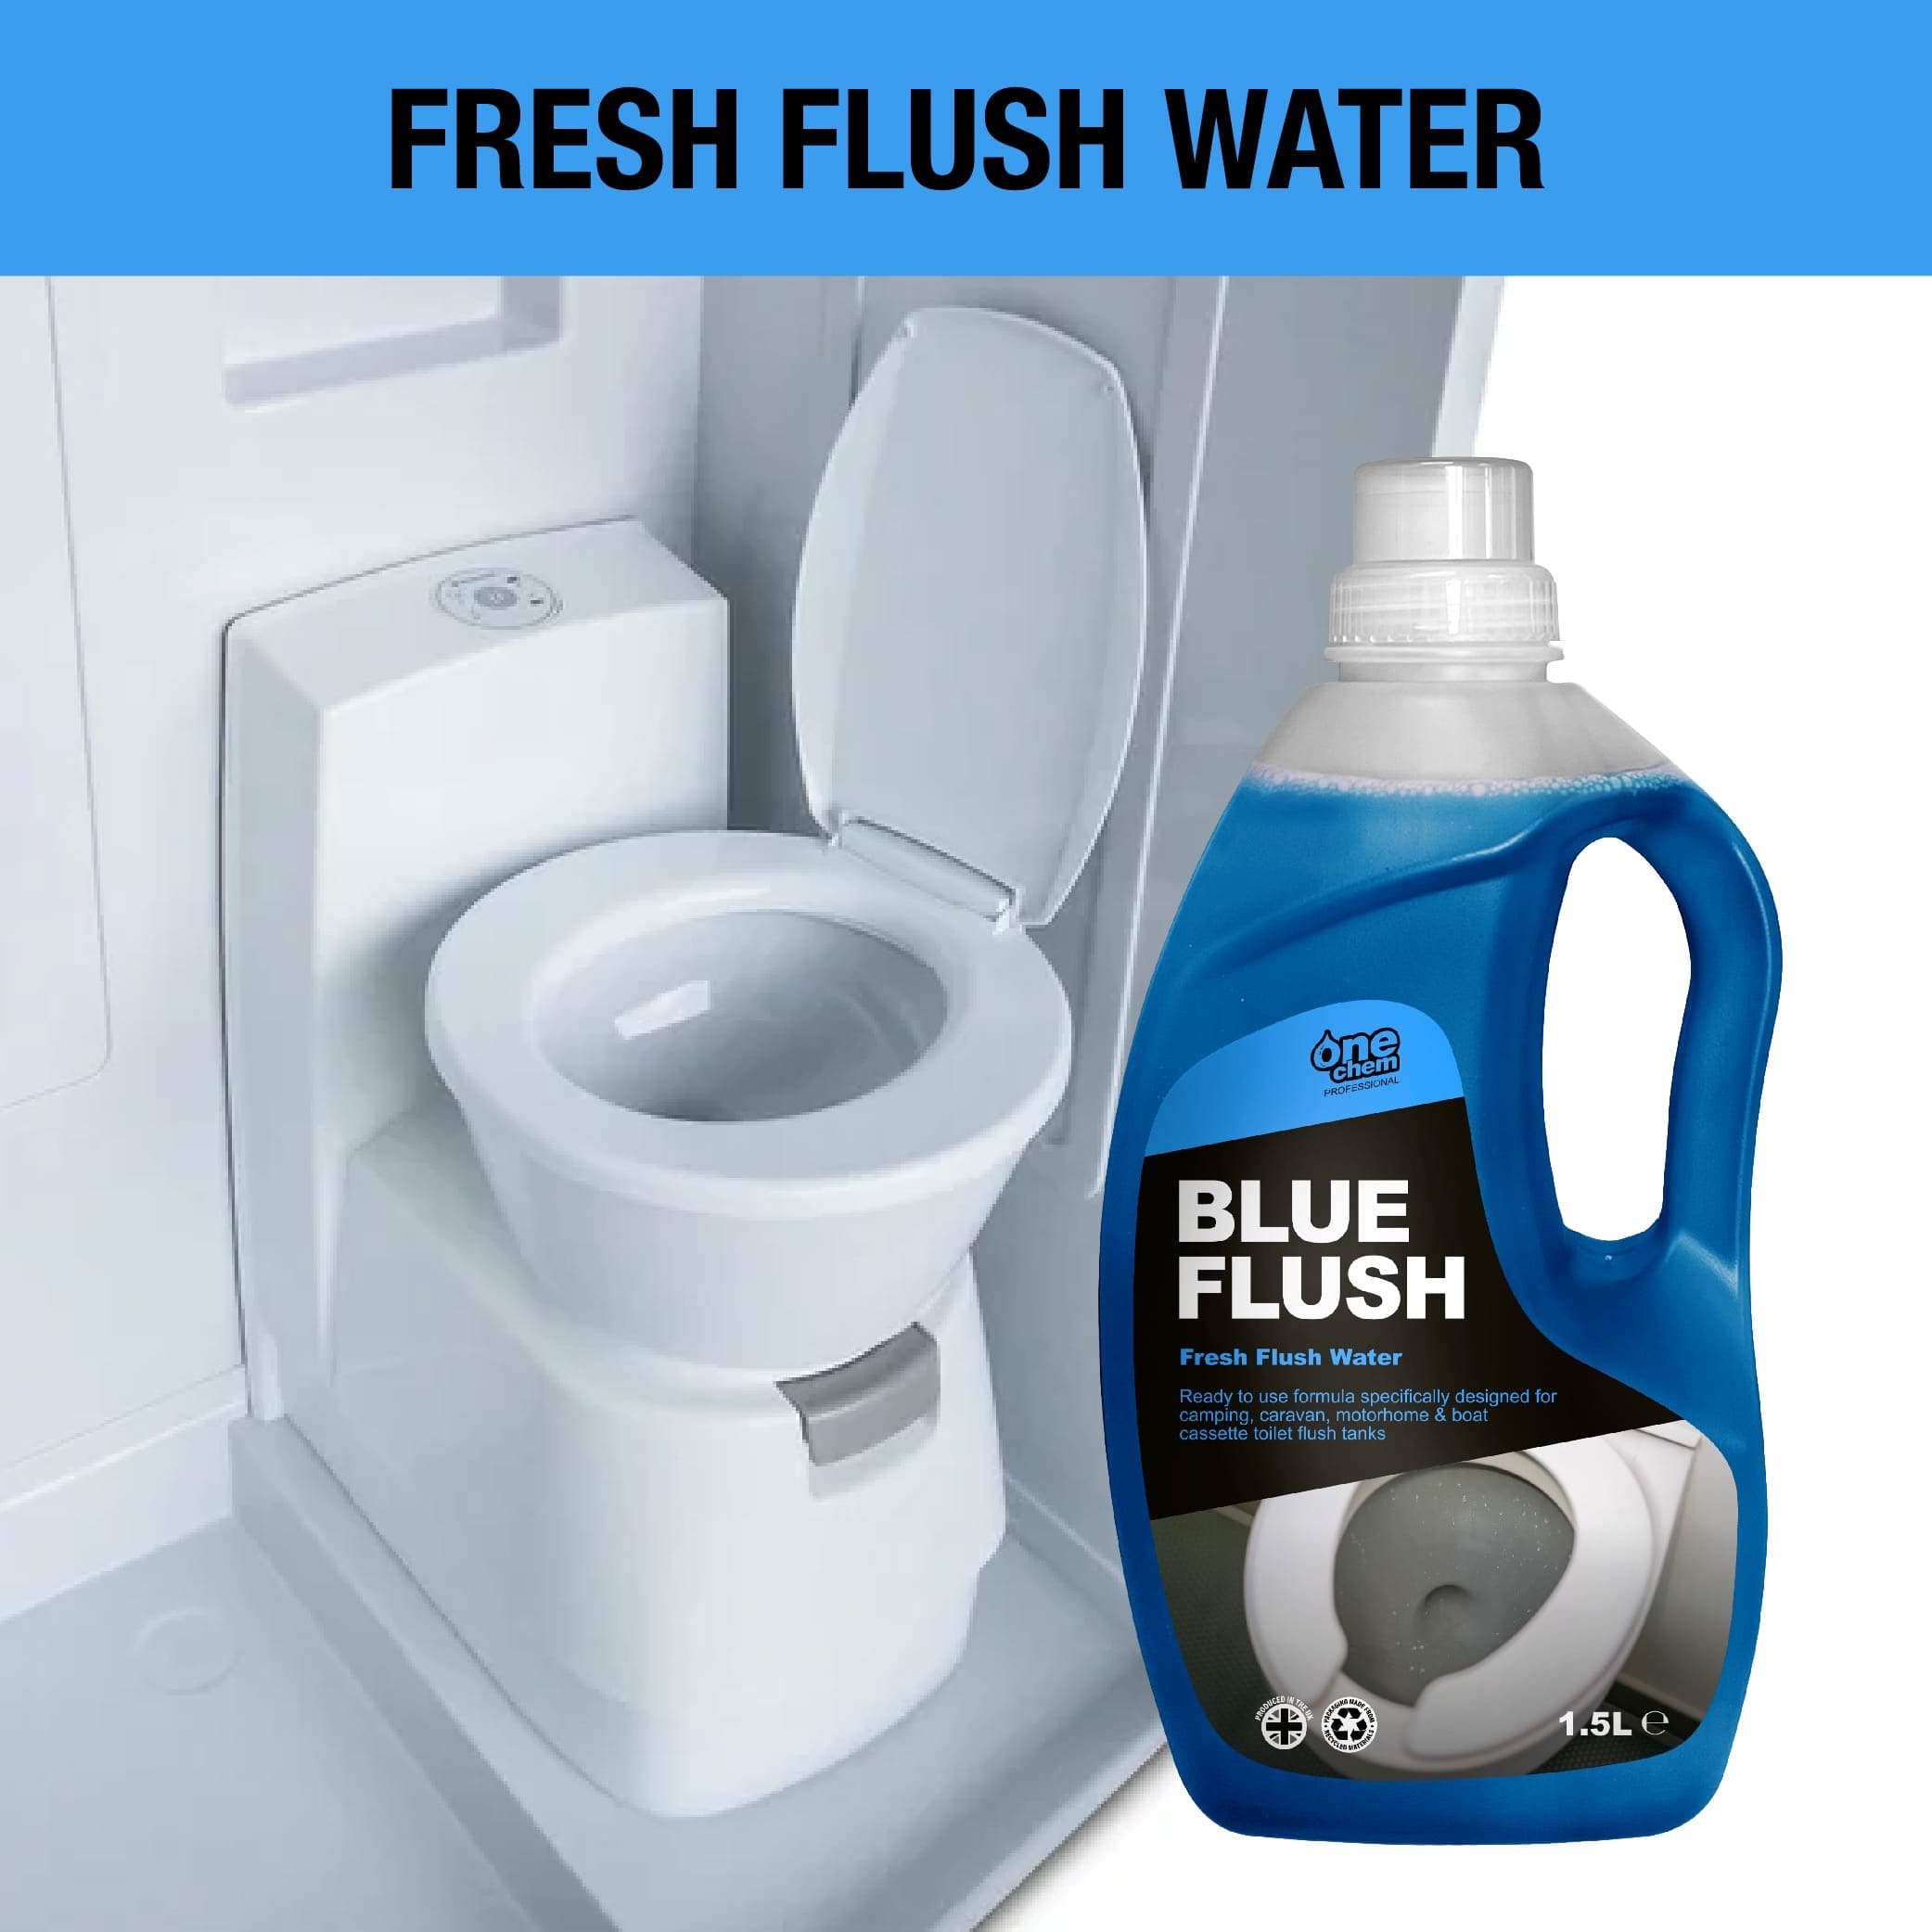 One Chem Professional Toilet Cleaner Blue Flush Fluid, 1.5 Litre